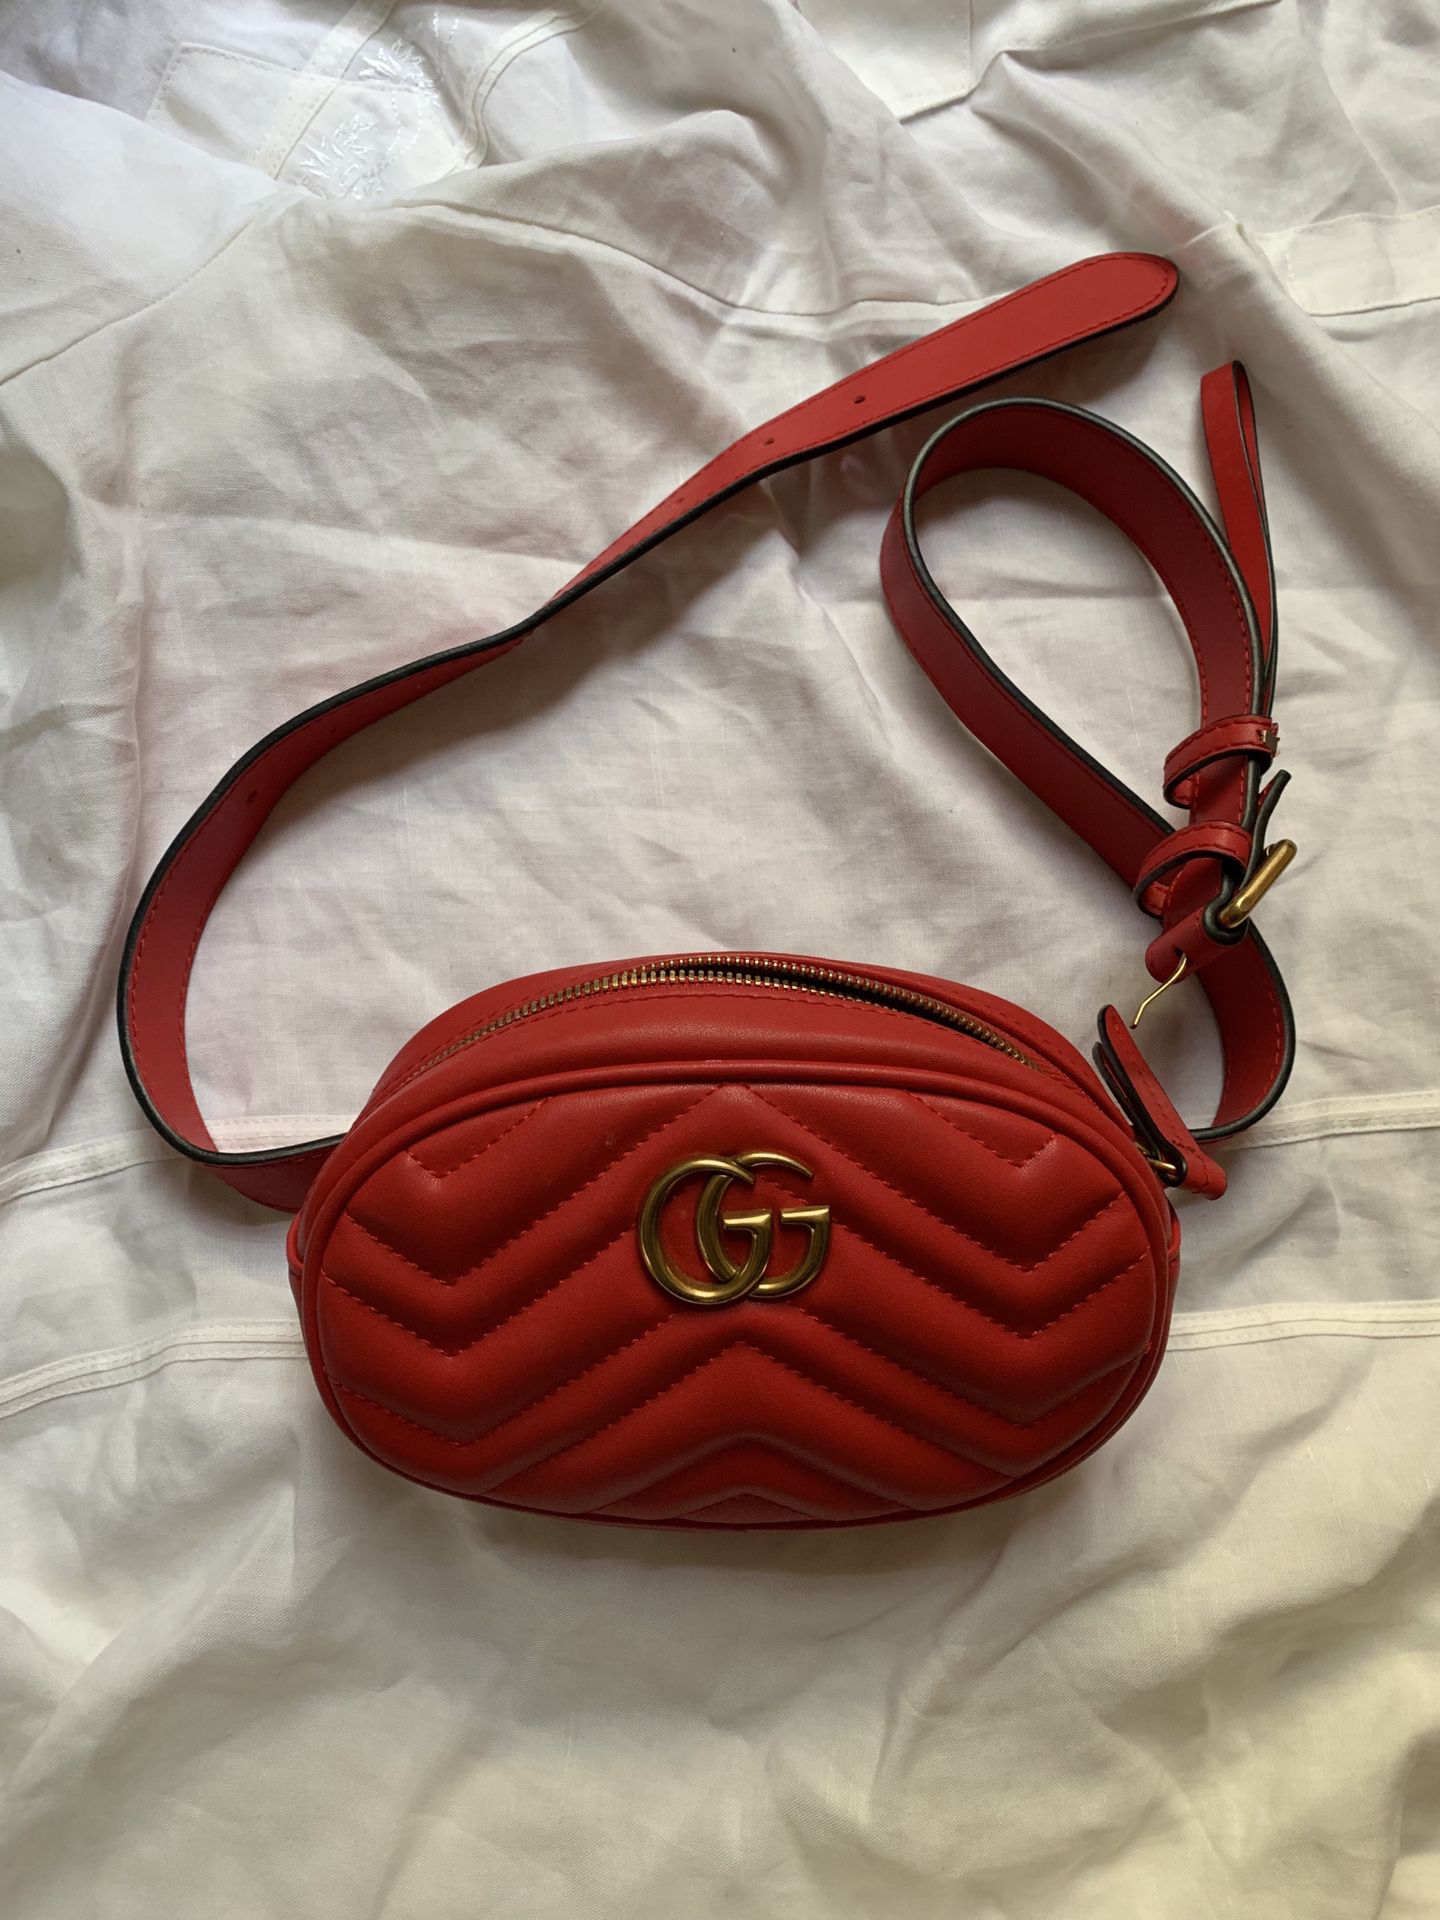 Gucci Belt Bag mint condition